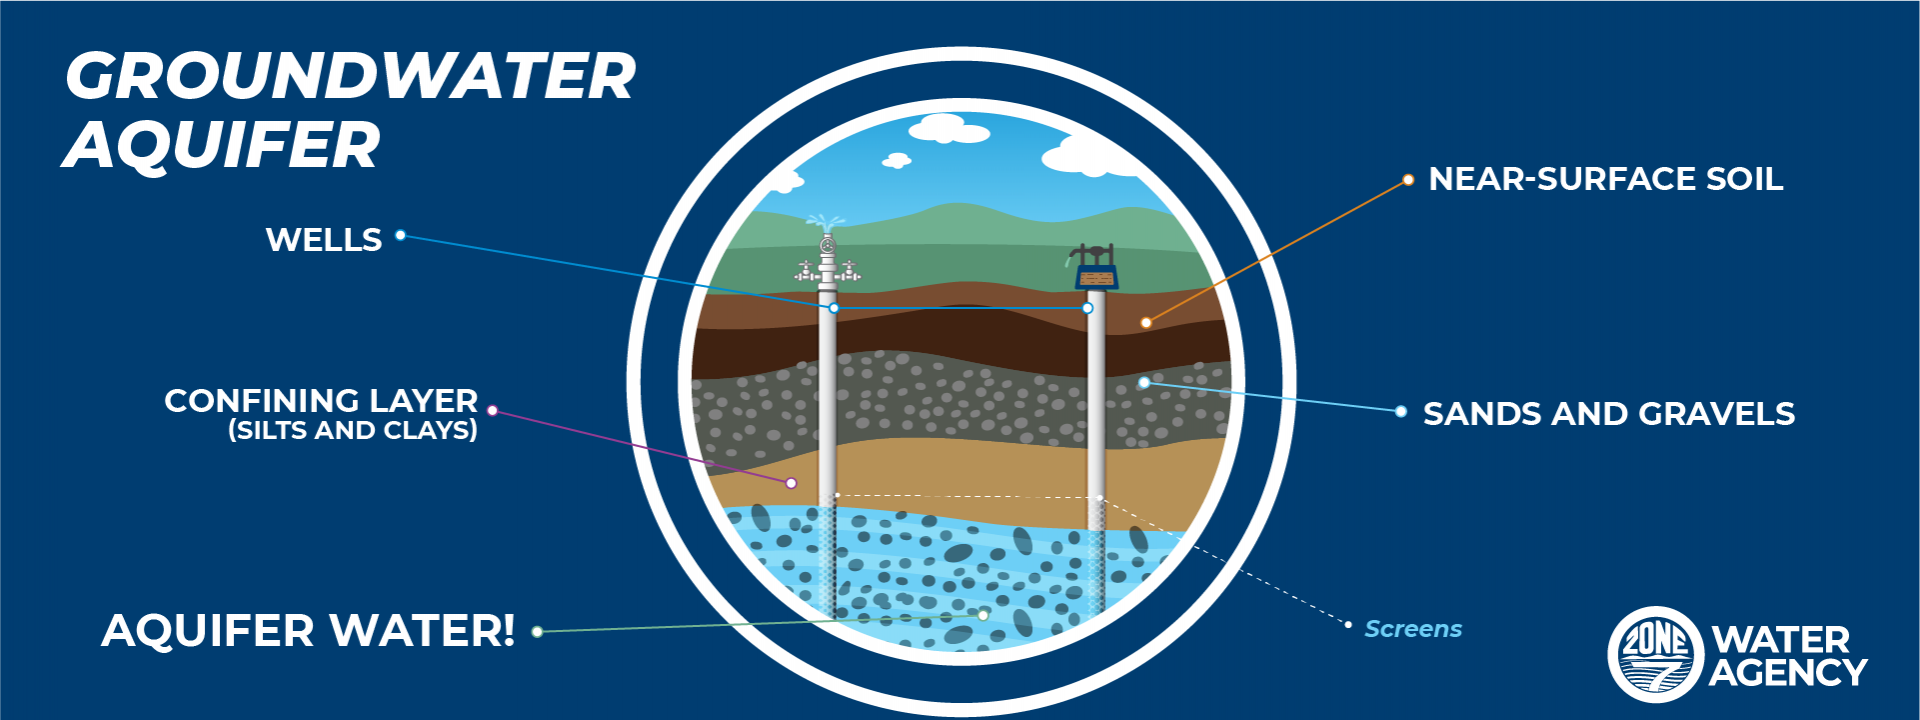 Groundwater Aquifer